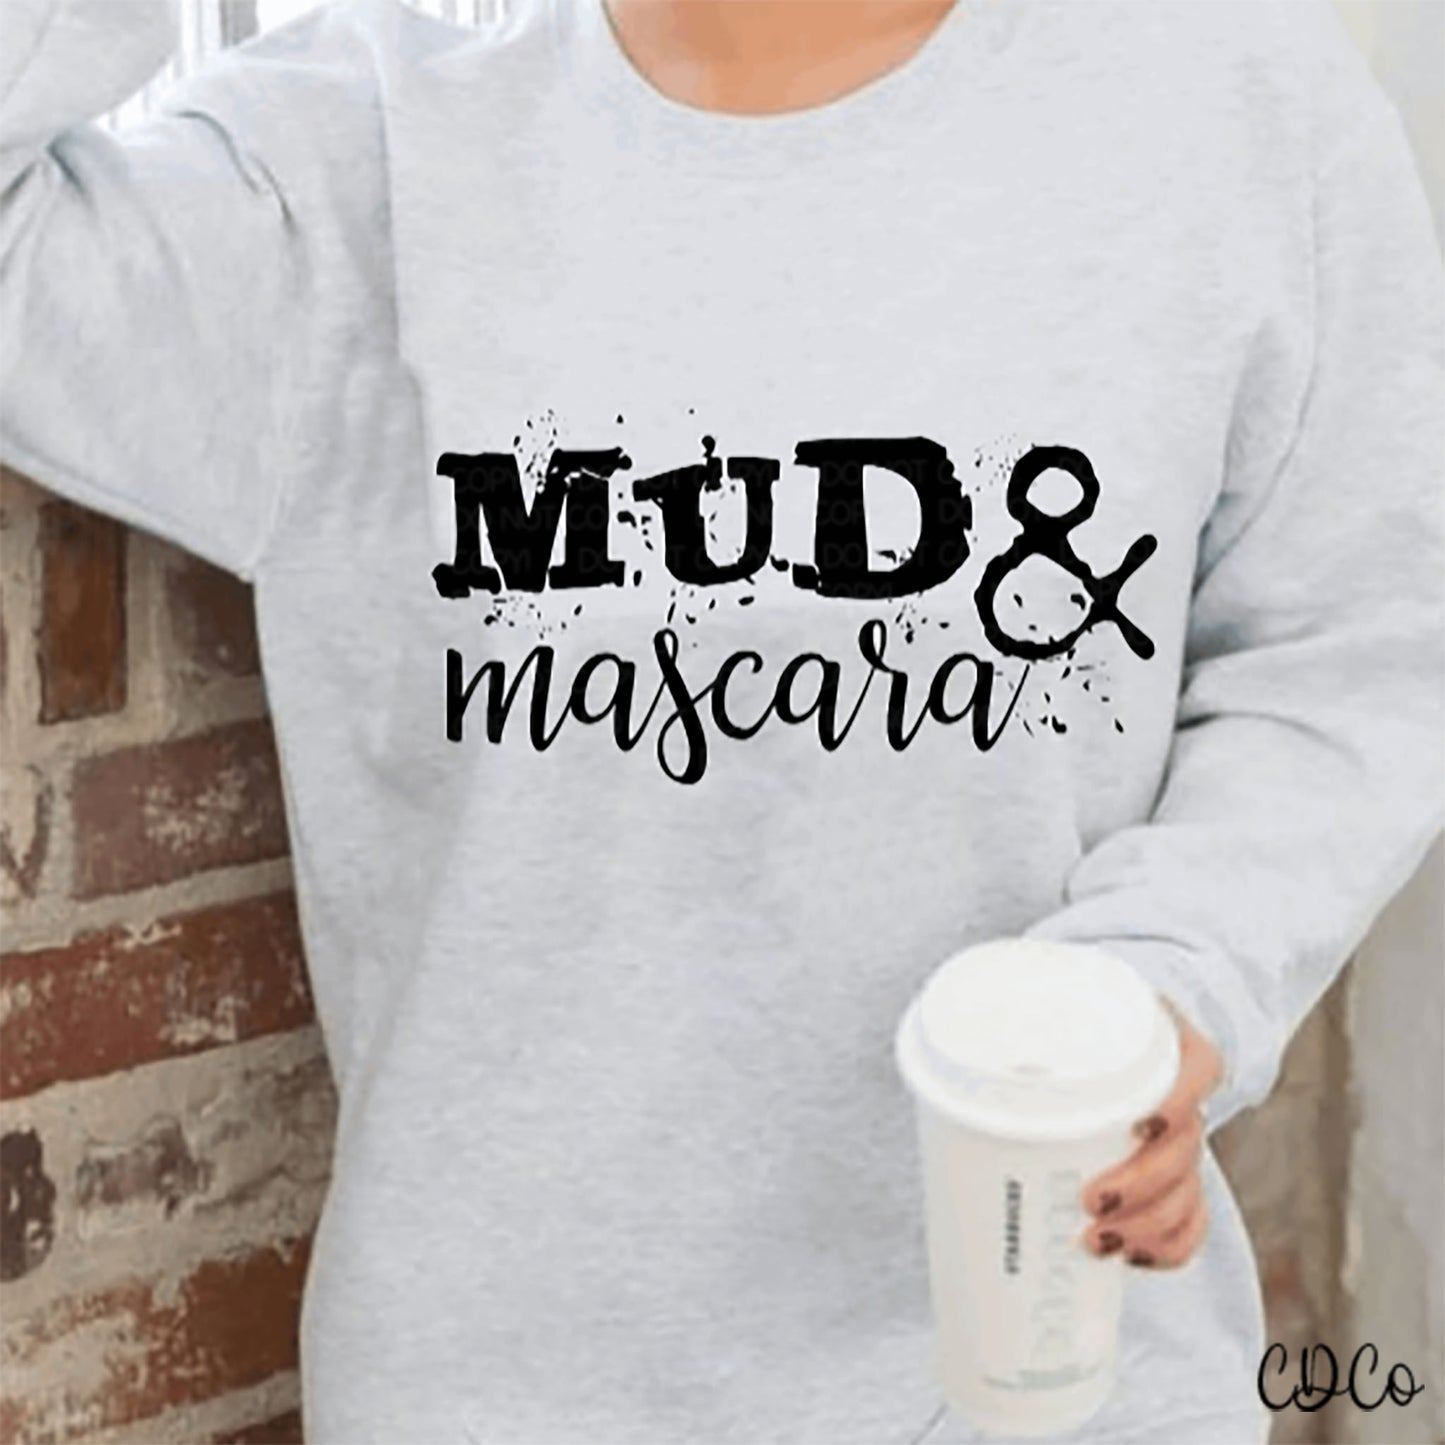 Mud & Mascara (325°)